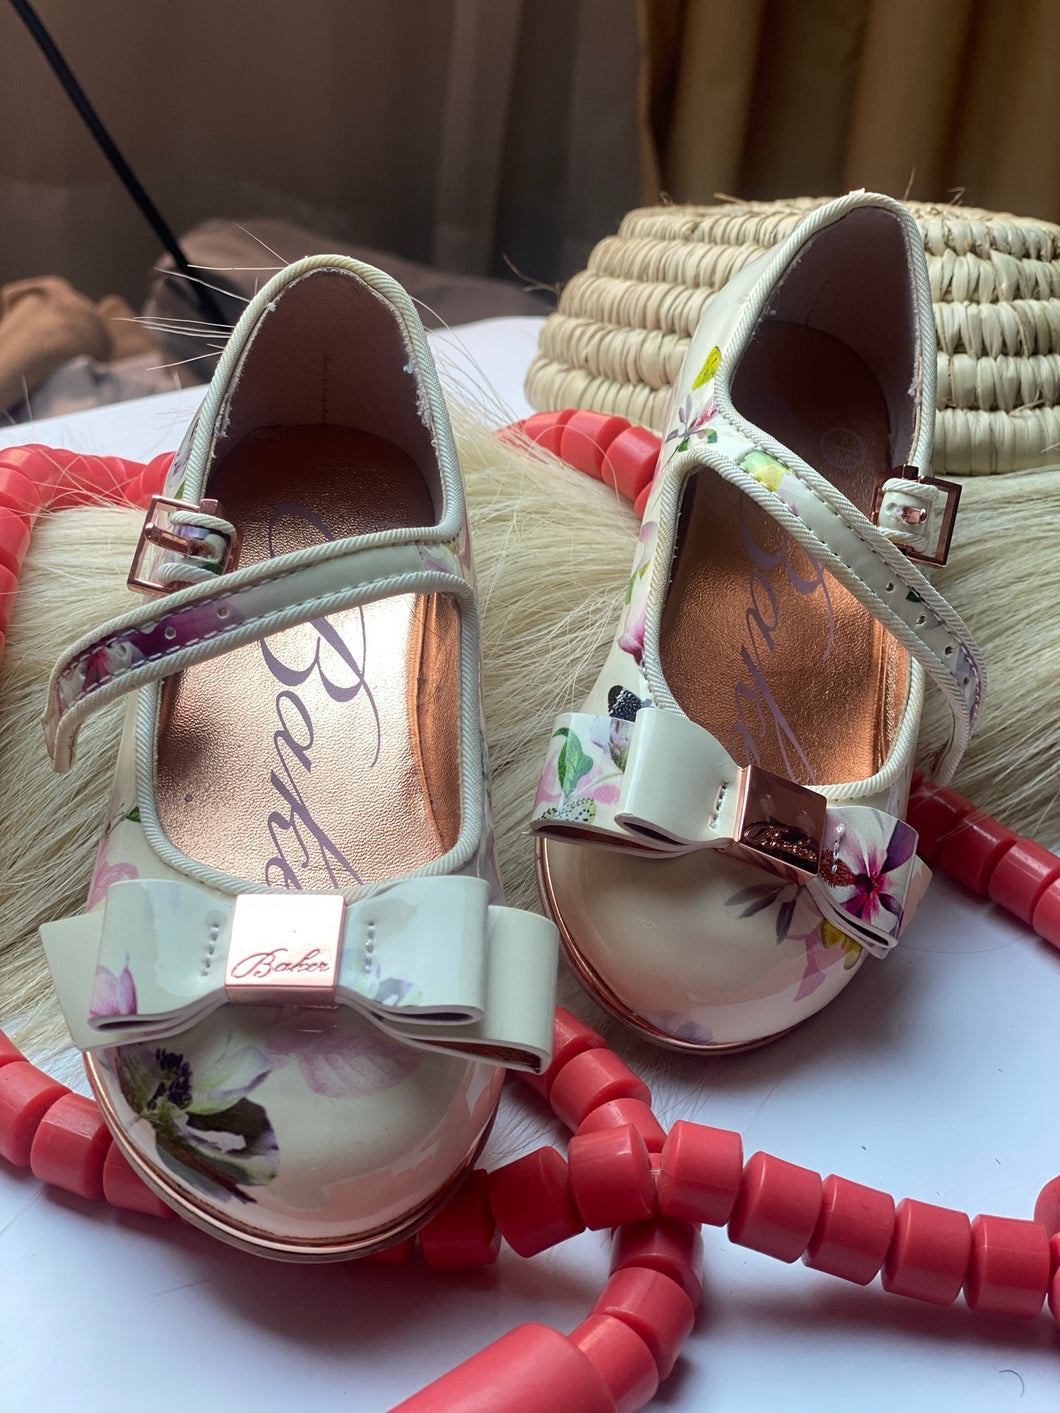 Baker (UK) - Beautiful Dressy shoes - Girl's size toddler 7UK/24 EU